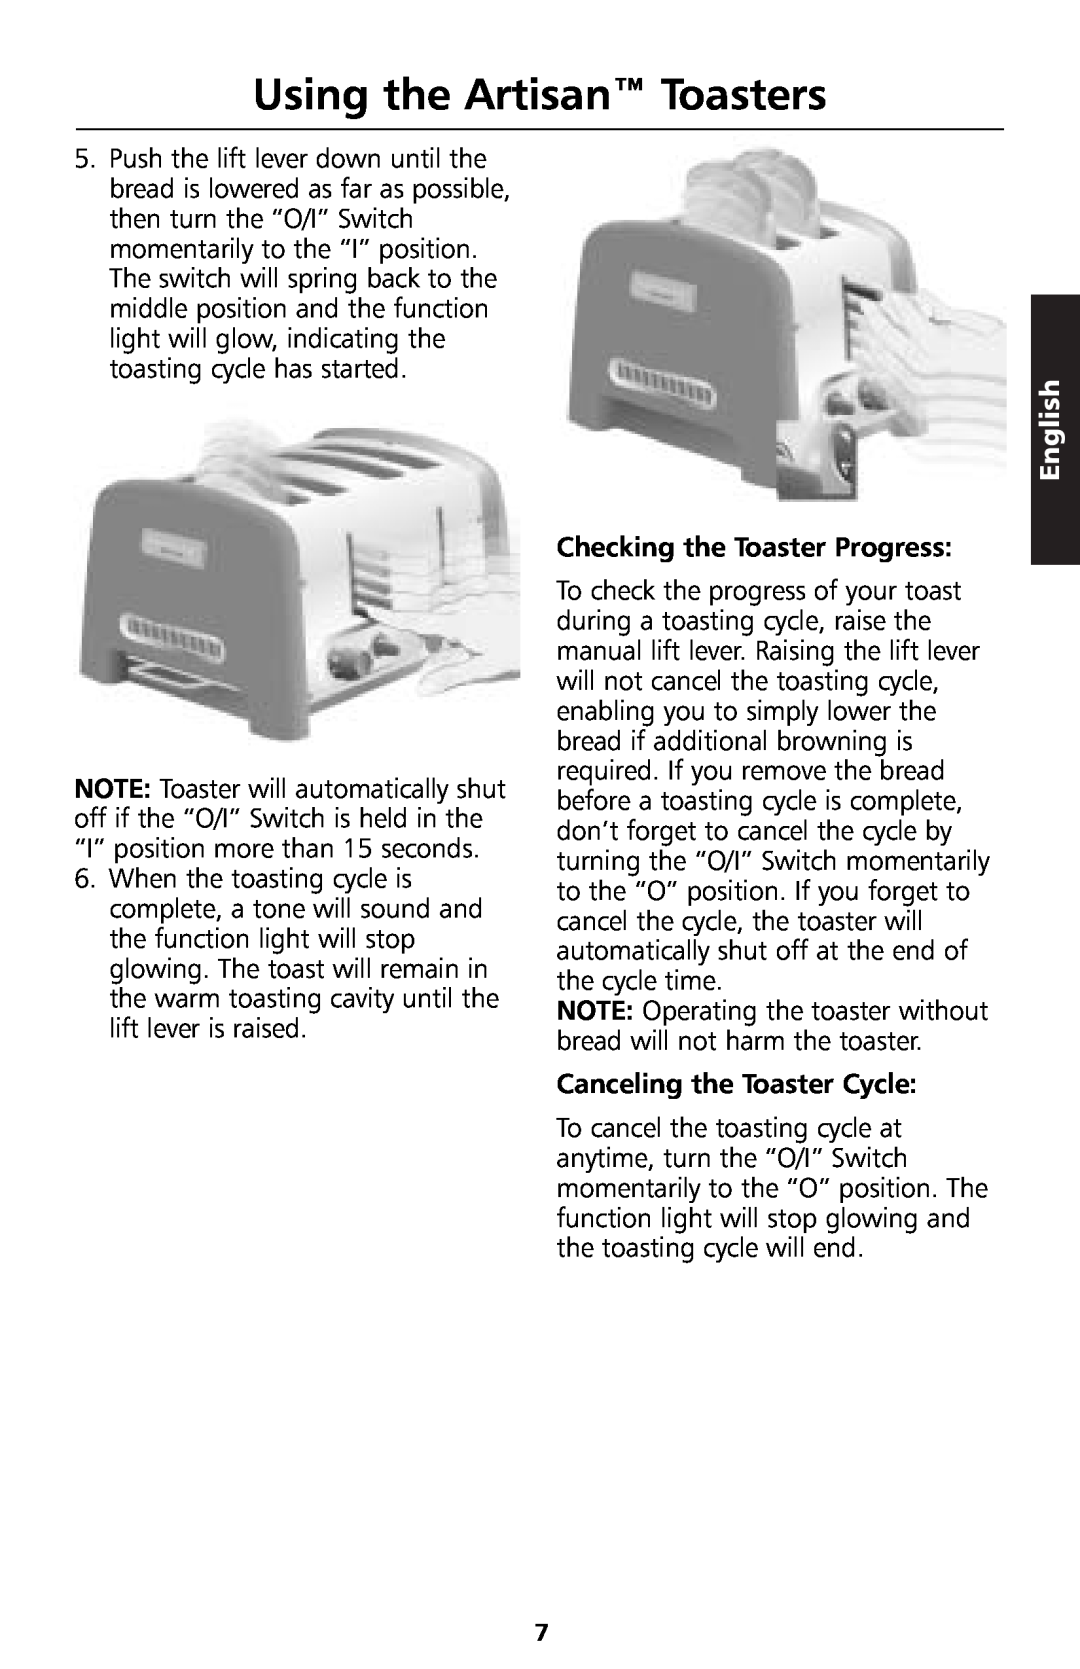 KitchenAid 5KTT890 manual Using the Artisan Toasters, English, Checking the Toaster Progress, Canceling the Toaster Cycle 